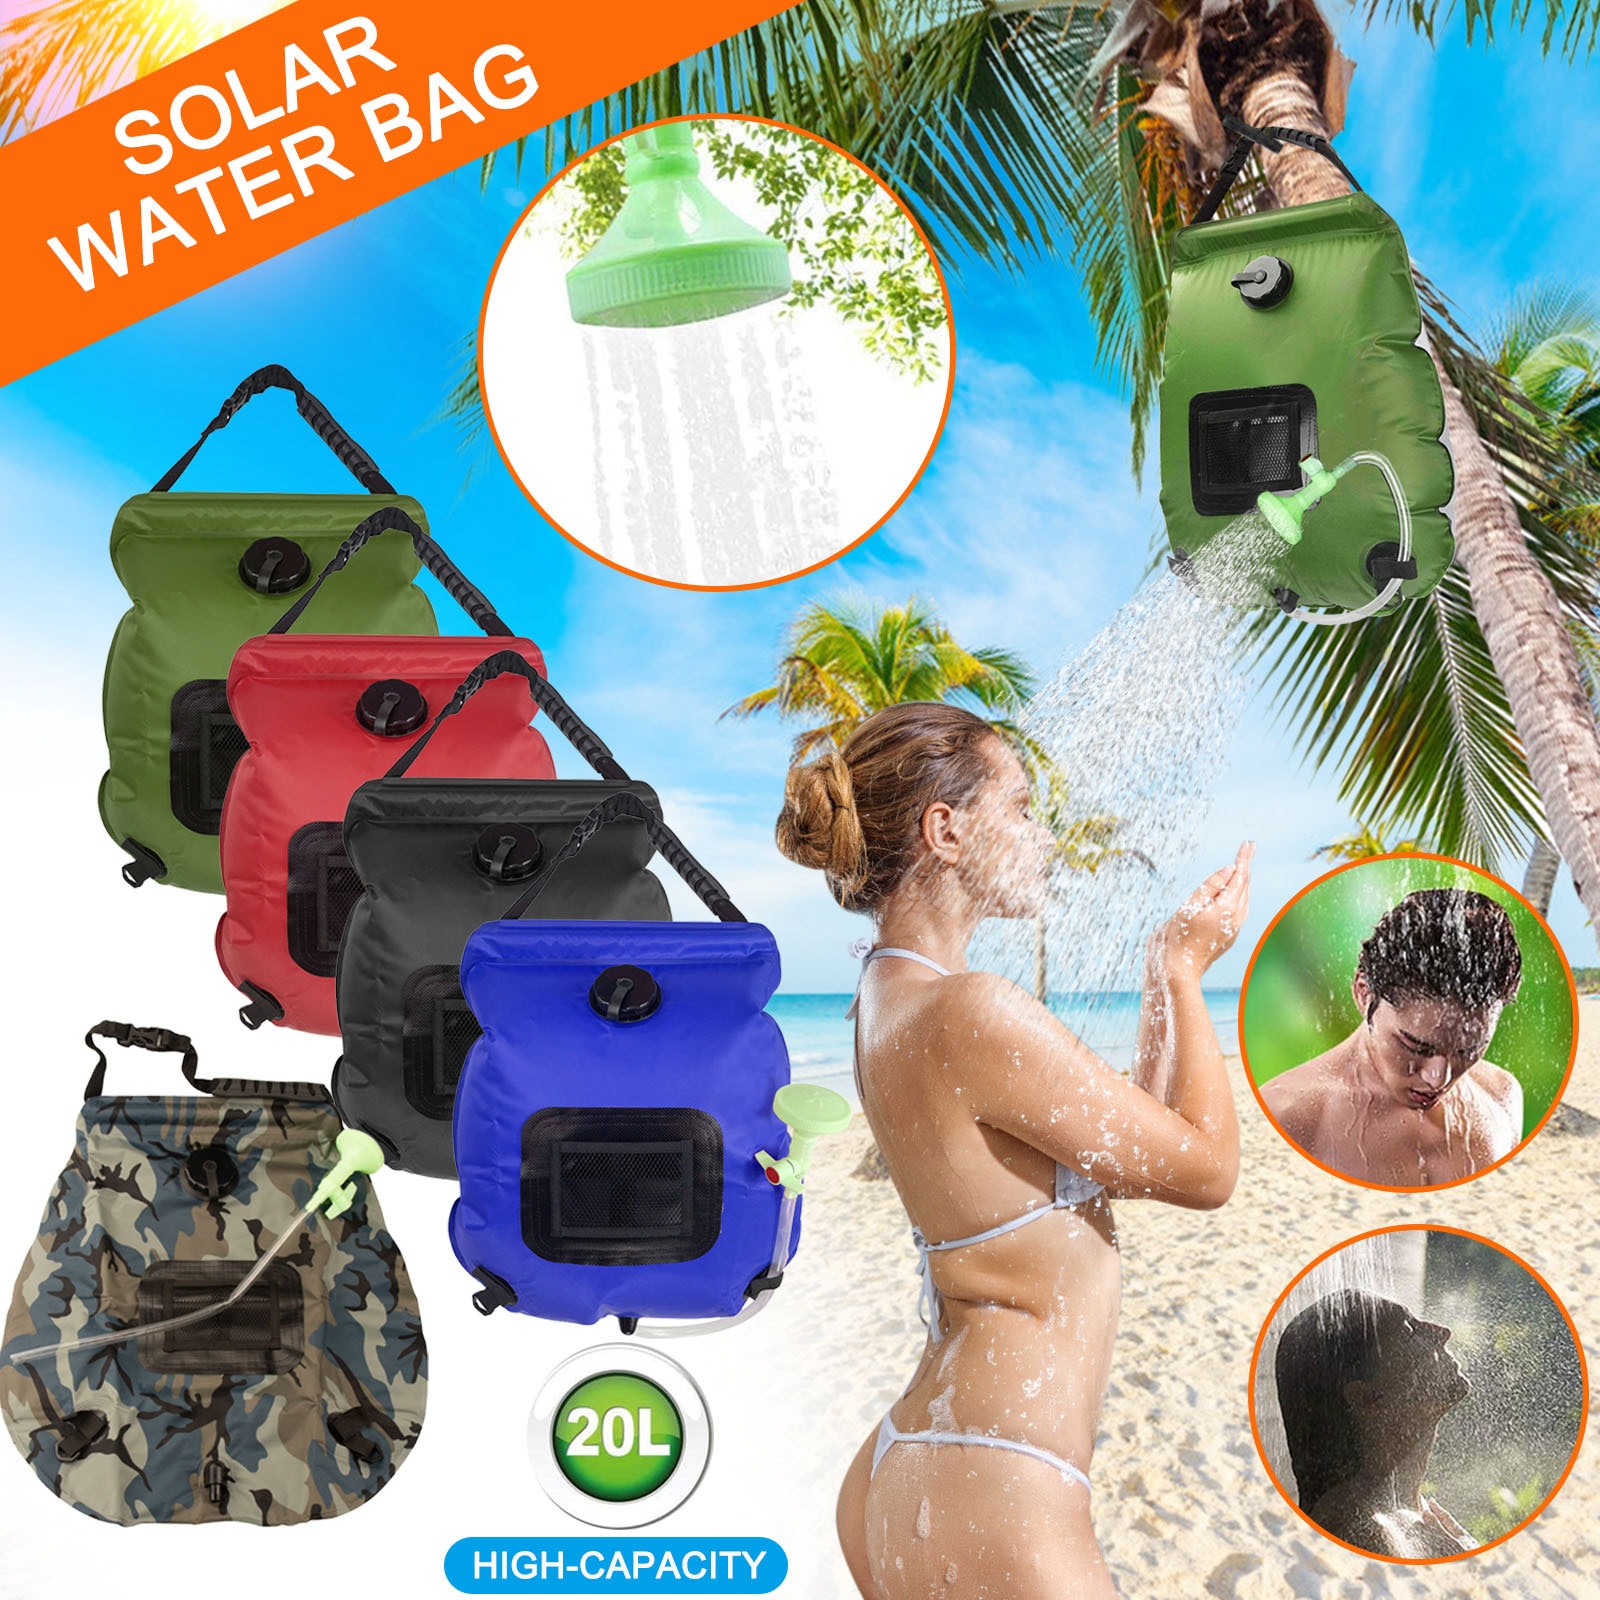 Outdoor camping Solar Thermal Bathing Bag Portable 20L Camping Bathing Water Bag camping душ для кемпинга